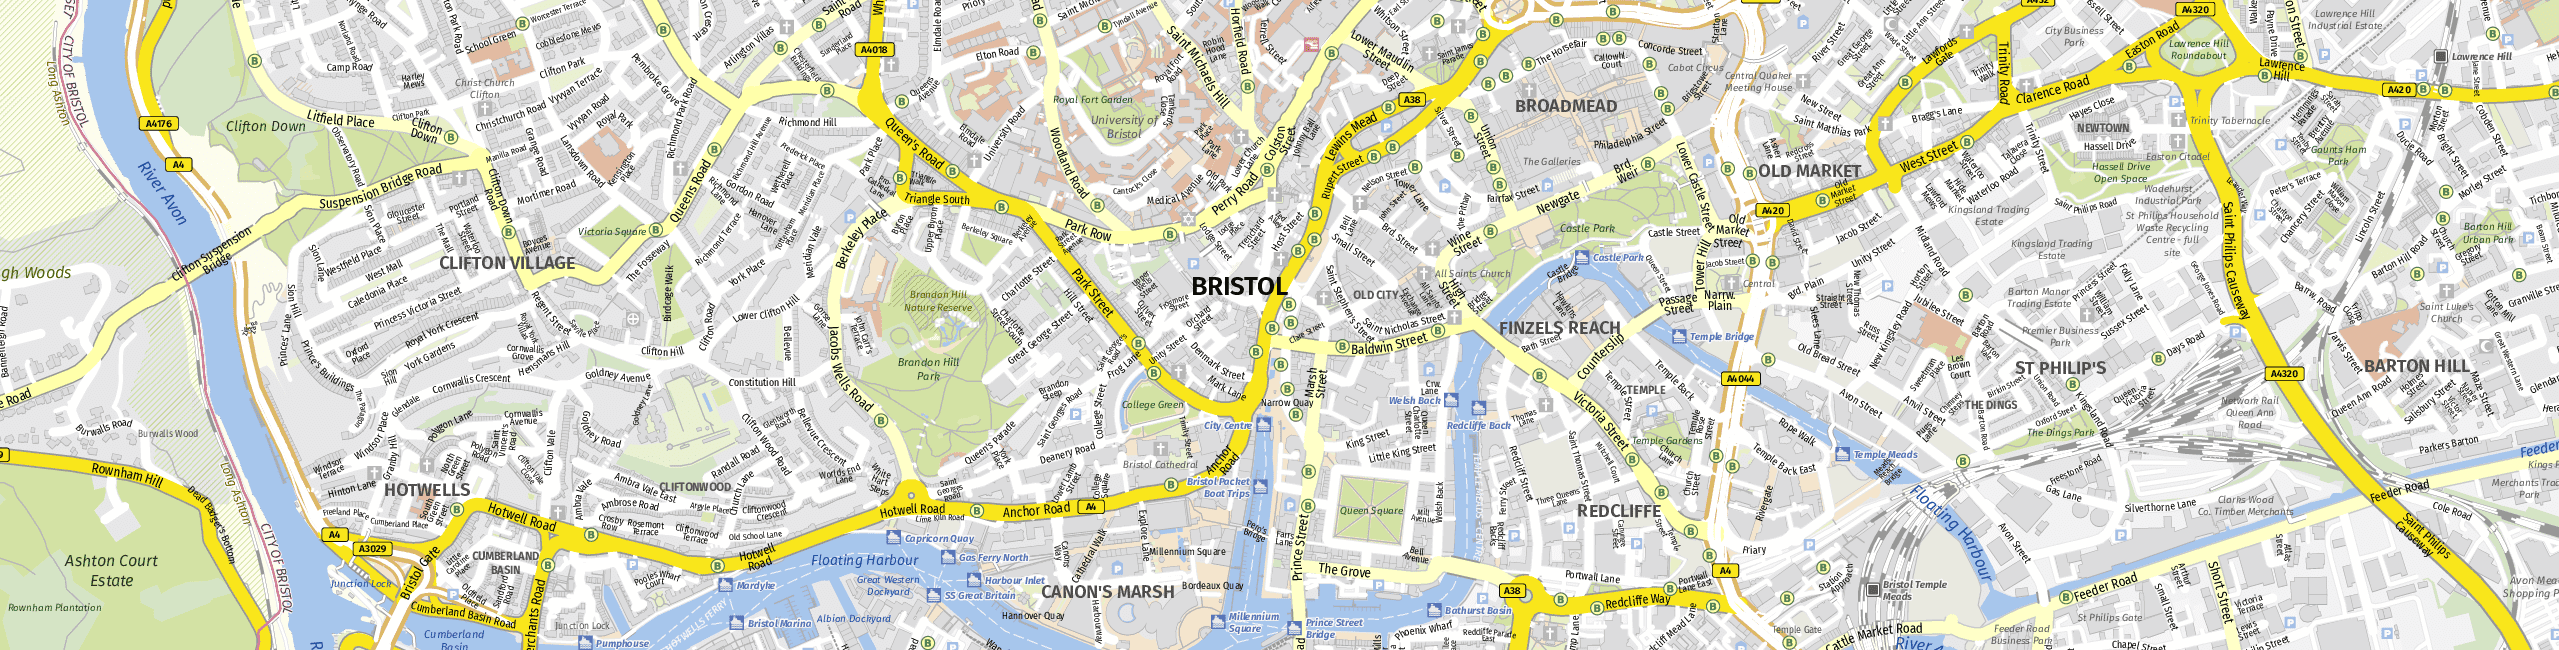 Stadtplan Bristol zum Downloaden.